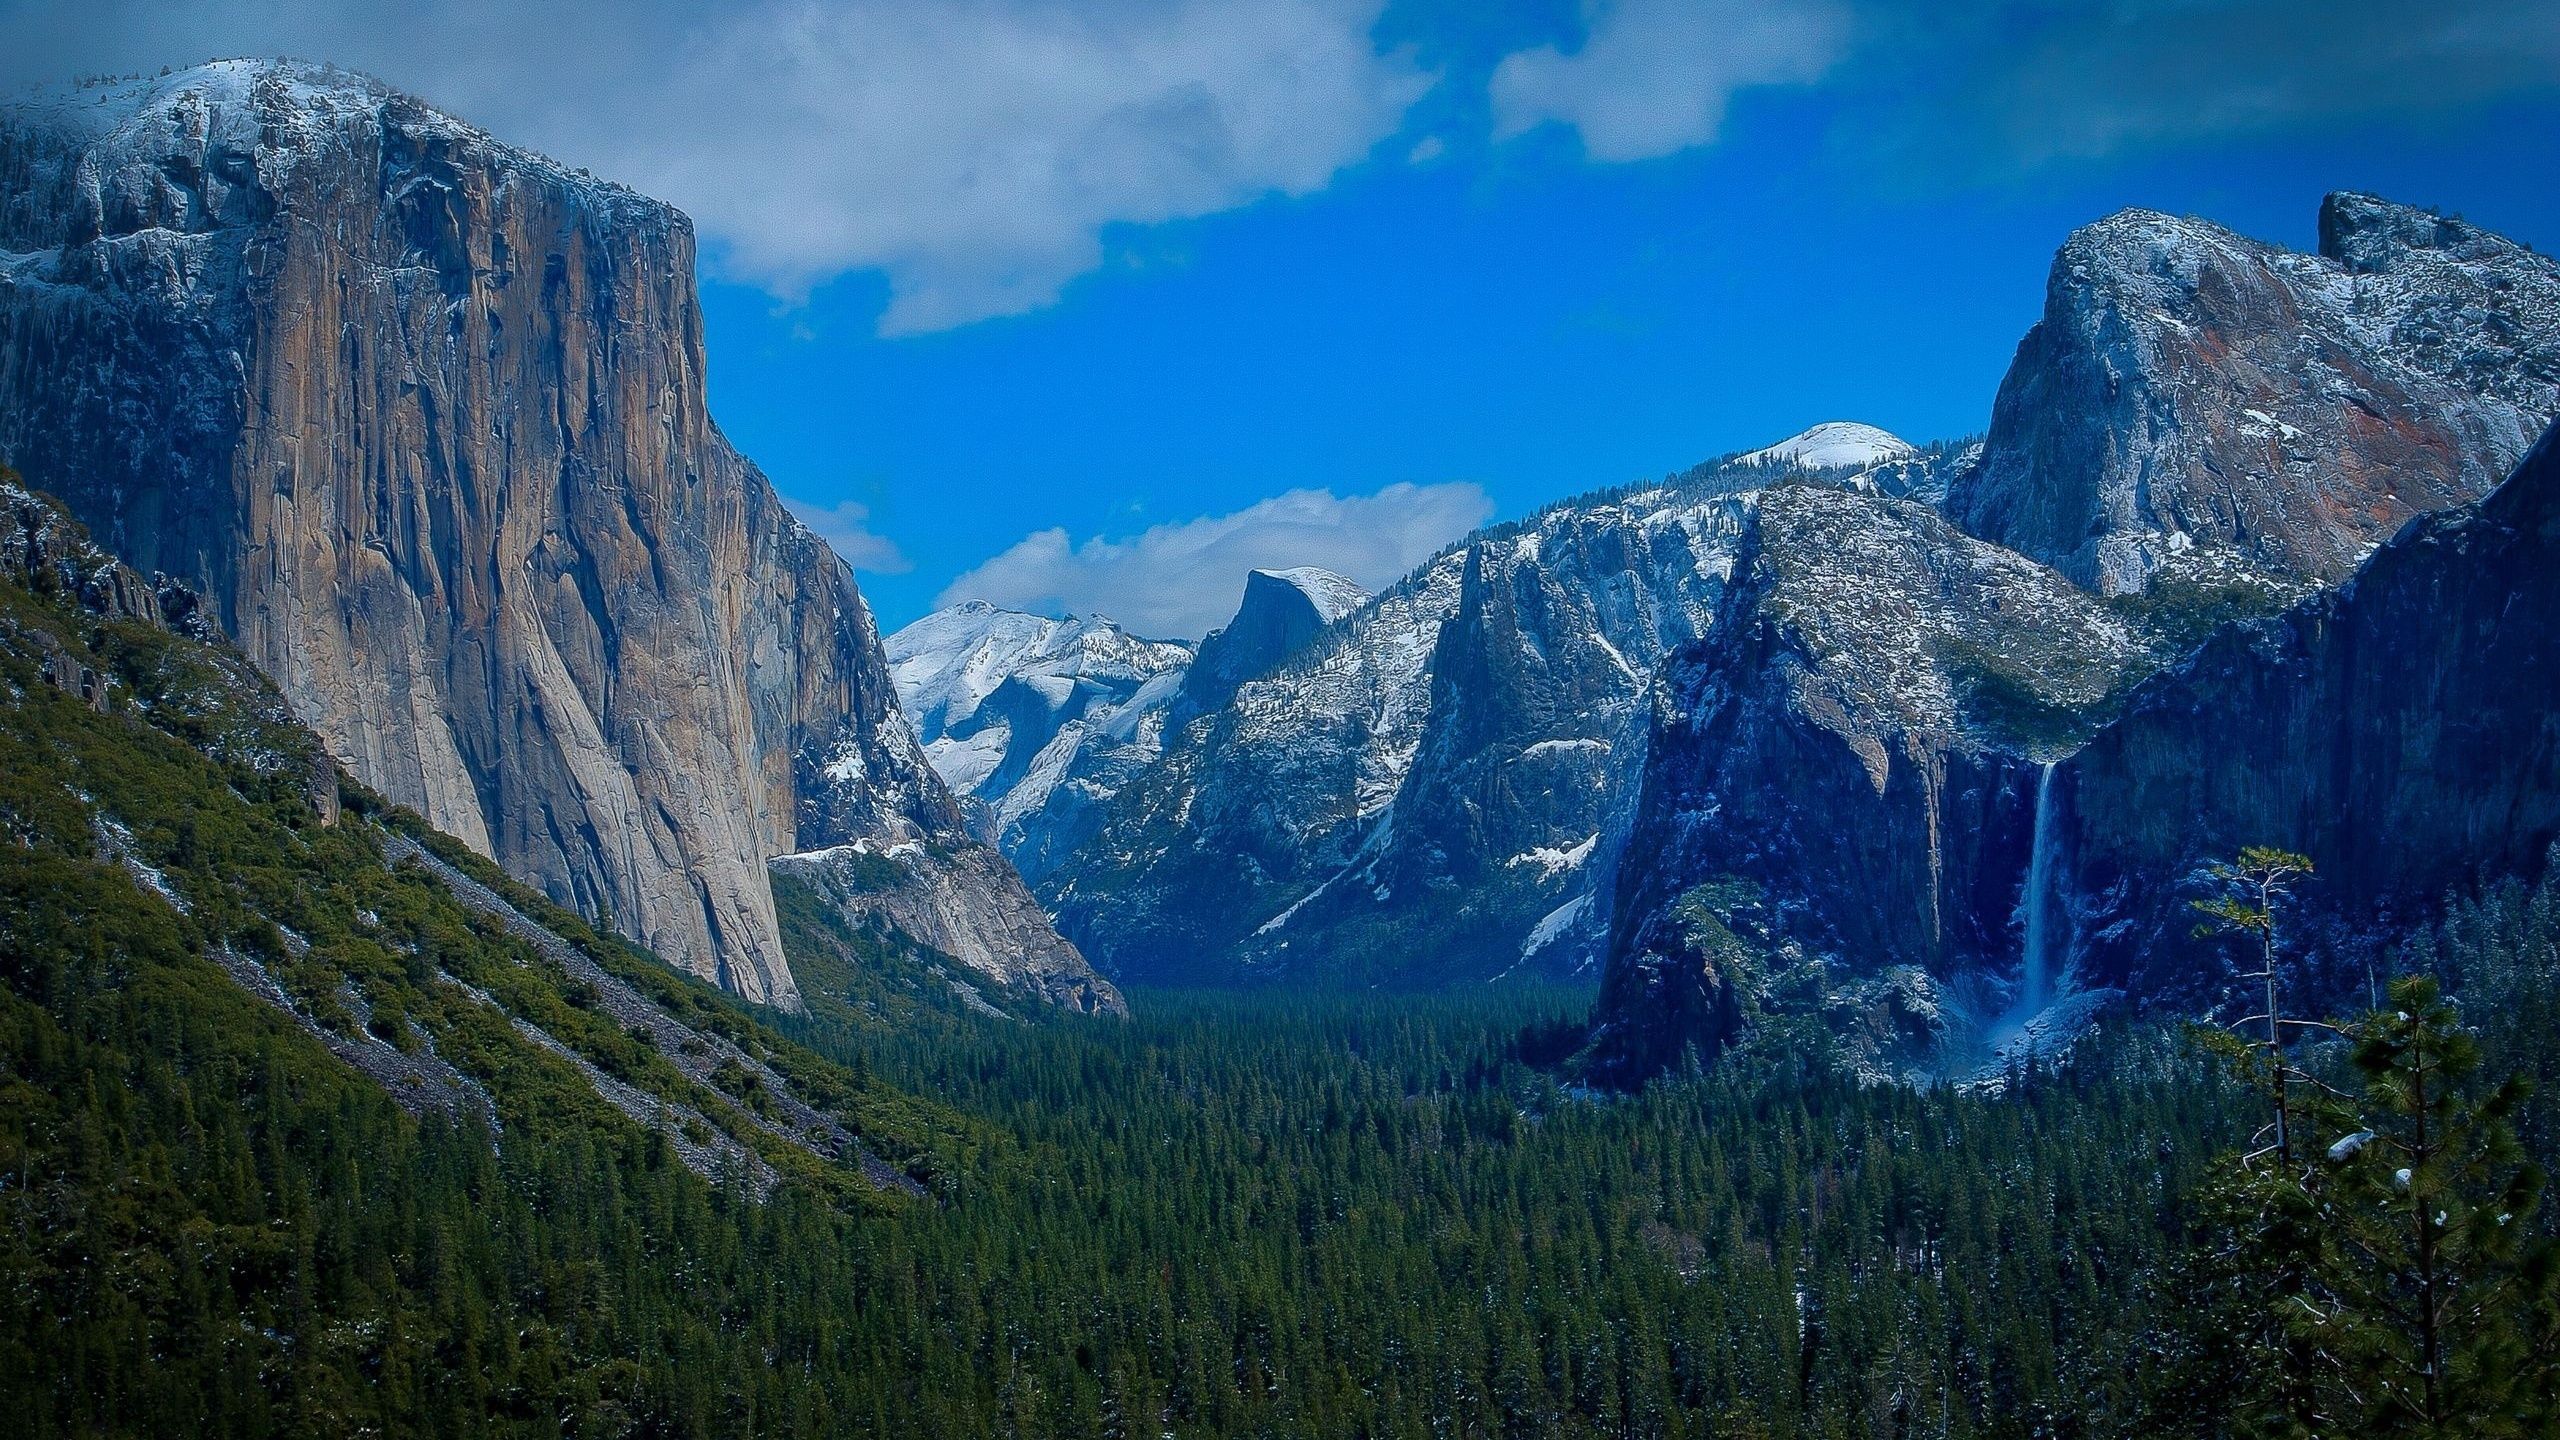 Yosemite National Park Desktop Wallpaper